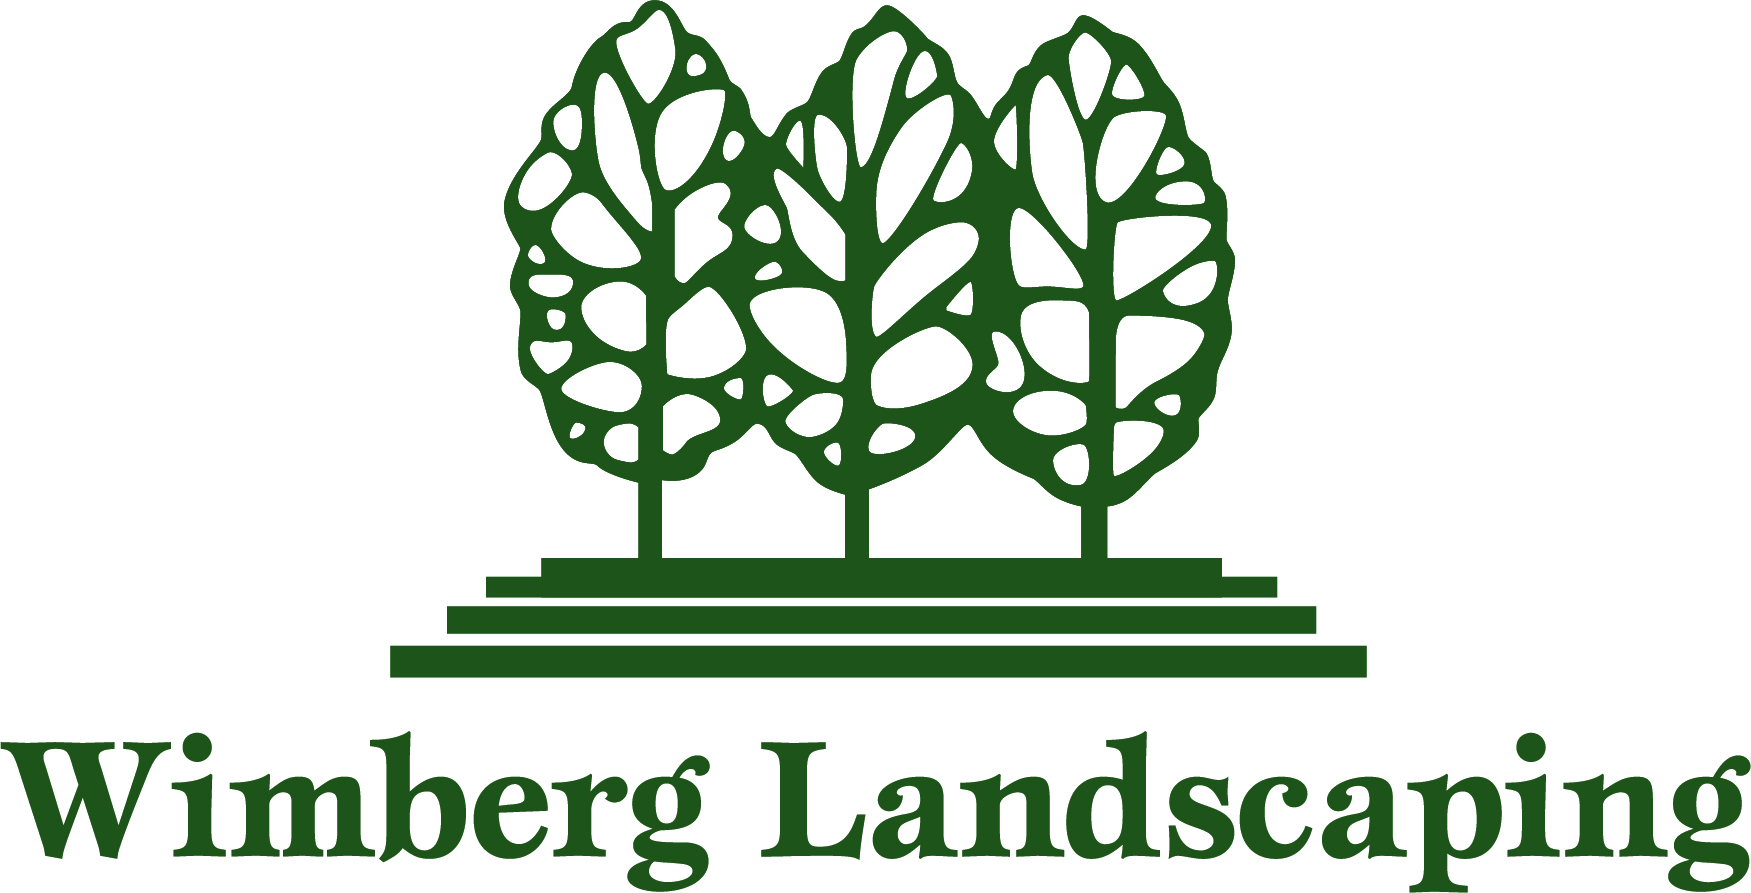 Presenting Sponsor: Wimberg Landscaping